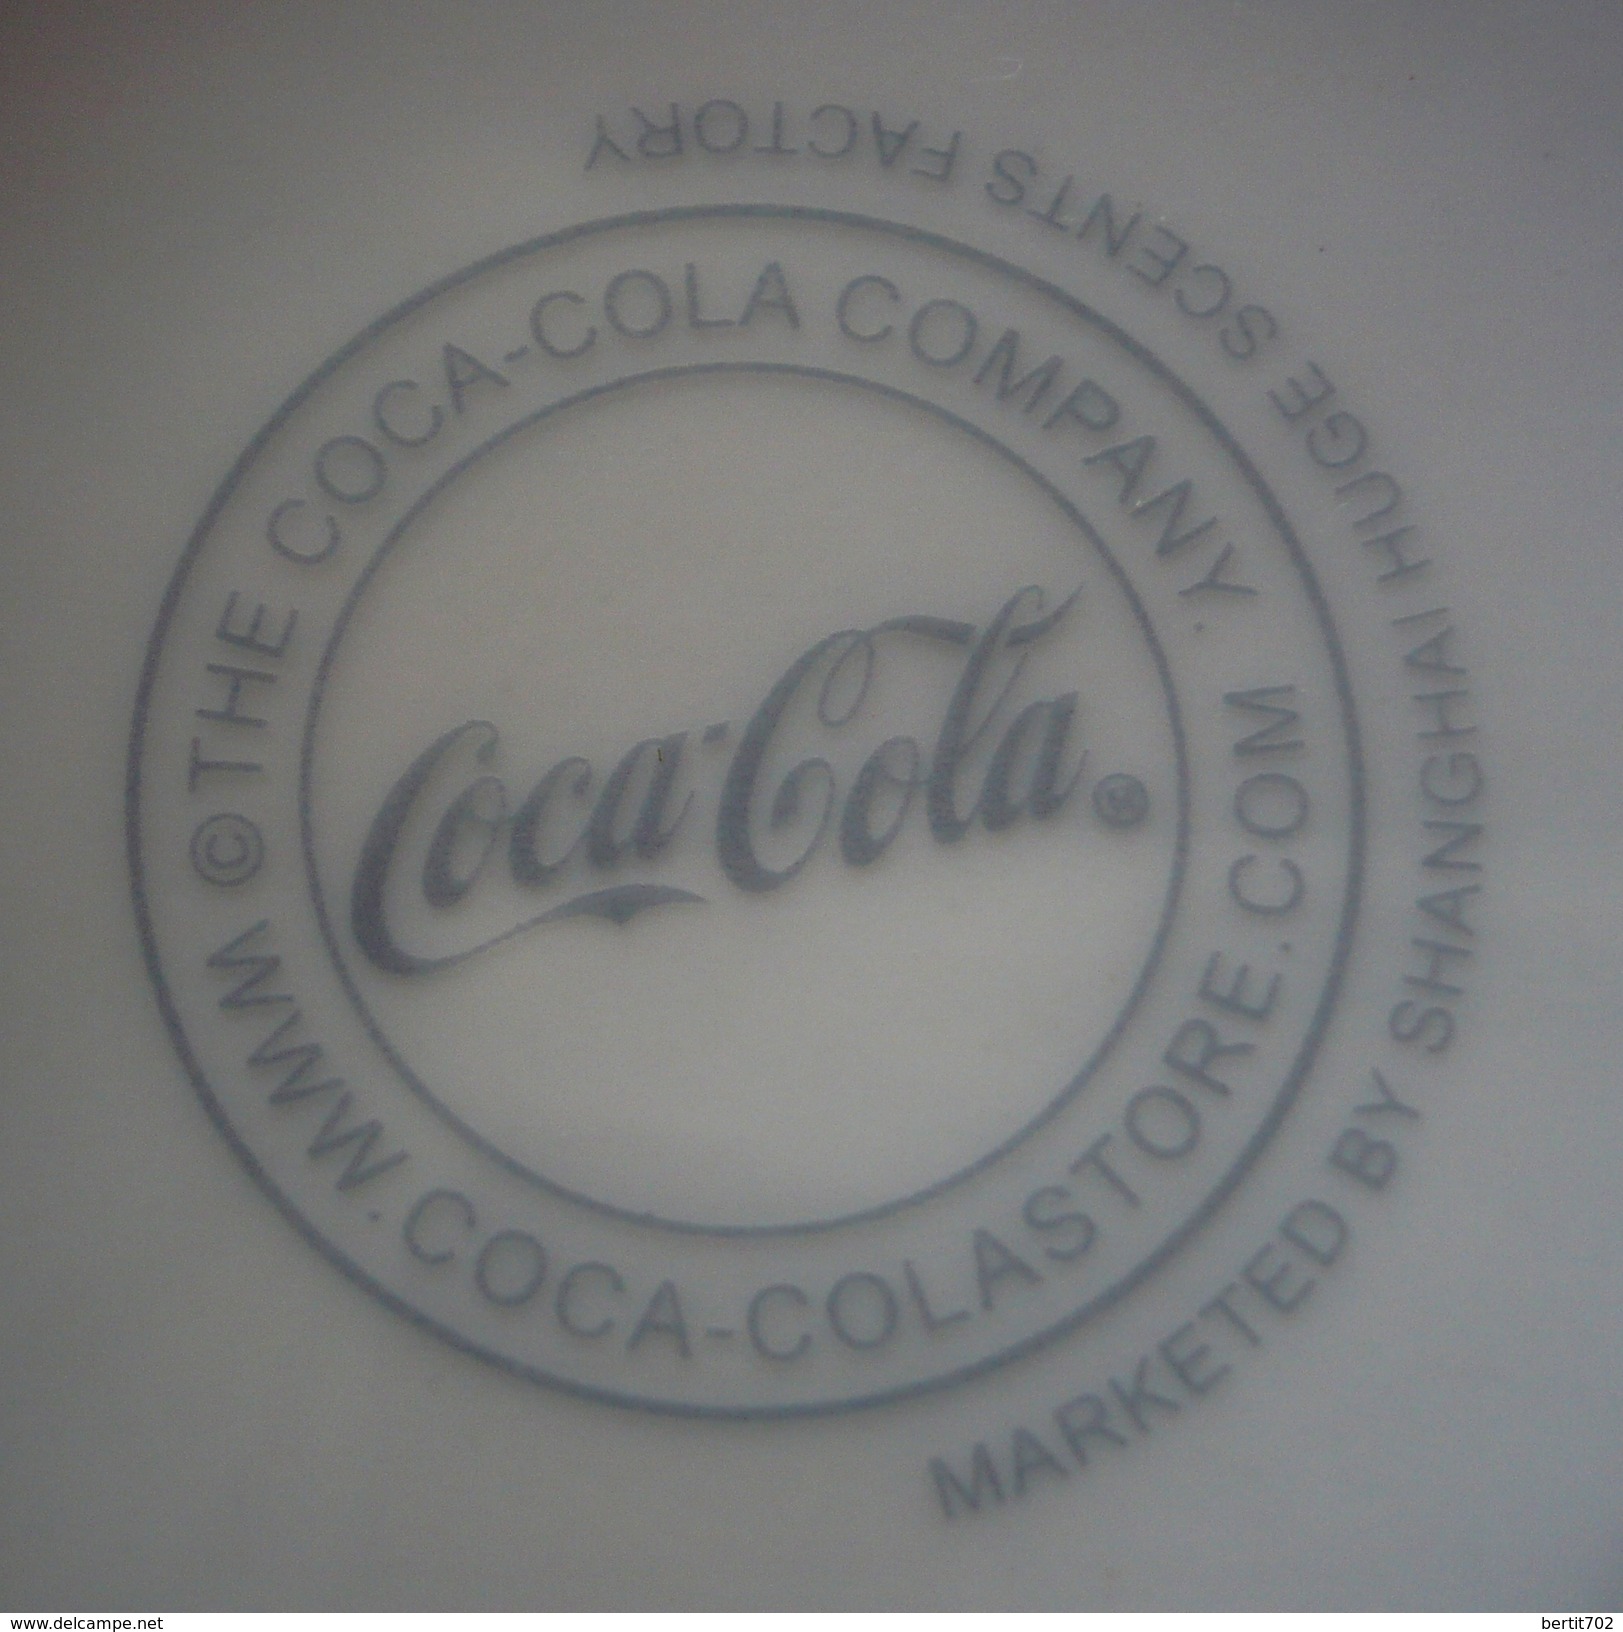 LOT DE 4 SUPERBES MUG - COCA-COLA - Drink - Coke - The Pause That Refreshes - Refreshing - Becher, Tassen, Gläser